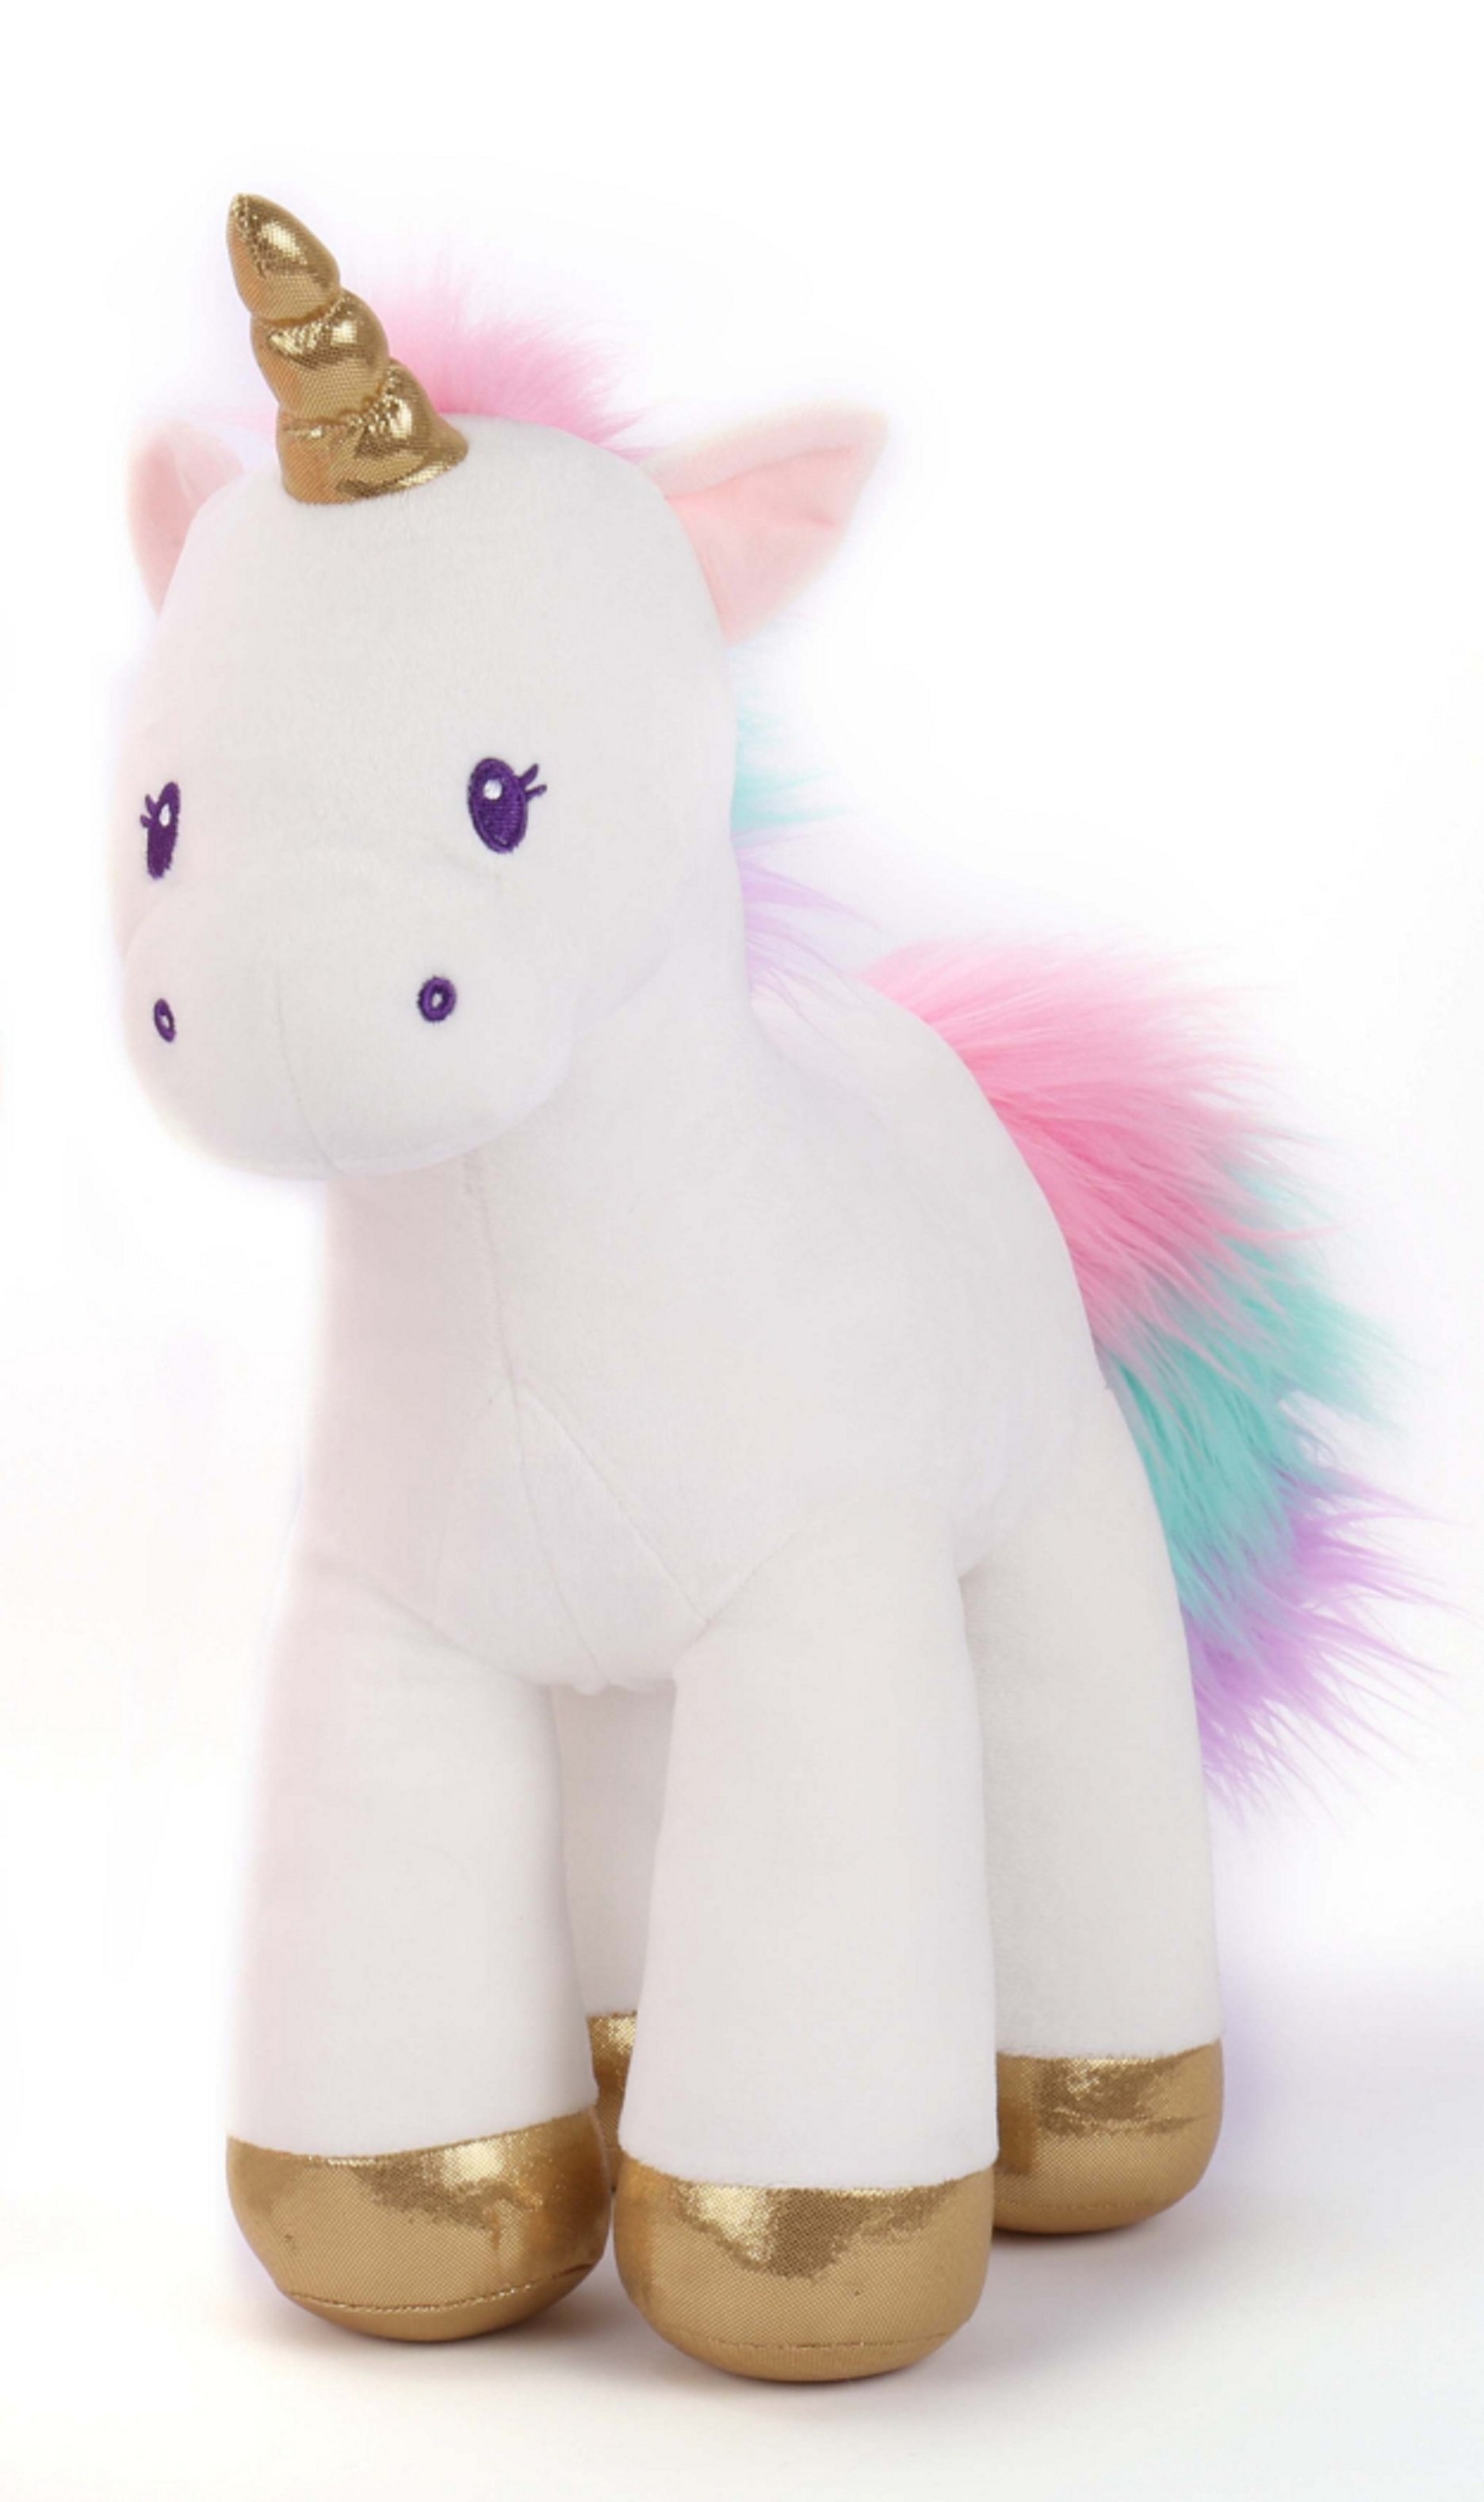 asda unicorn teddy